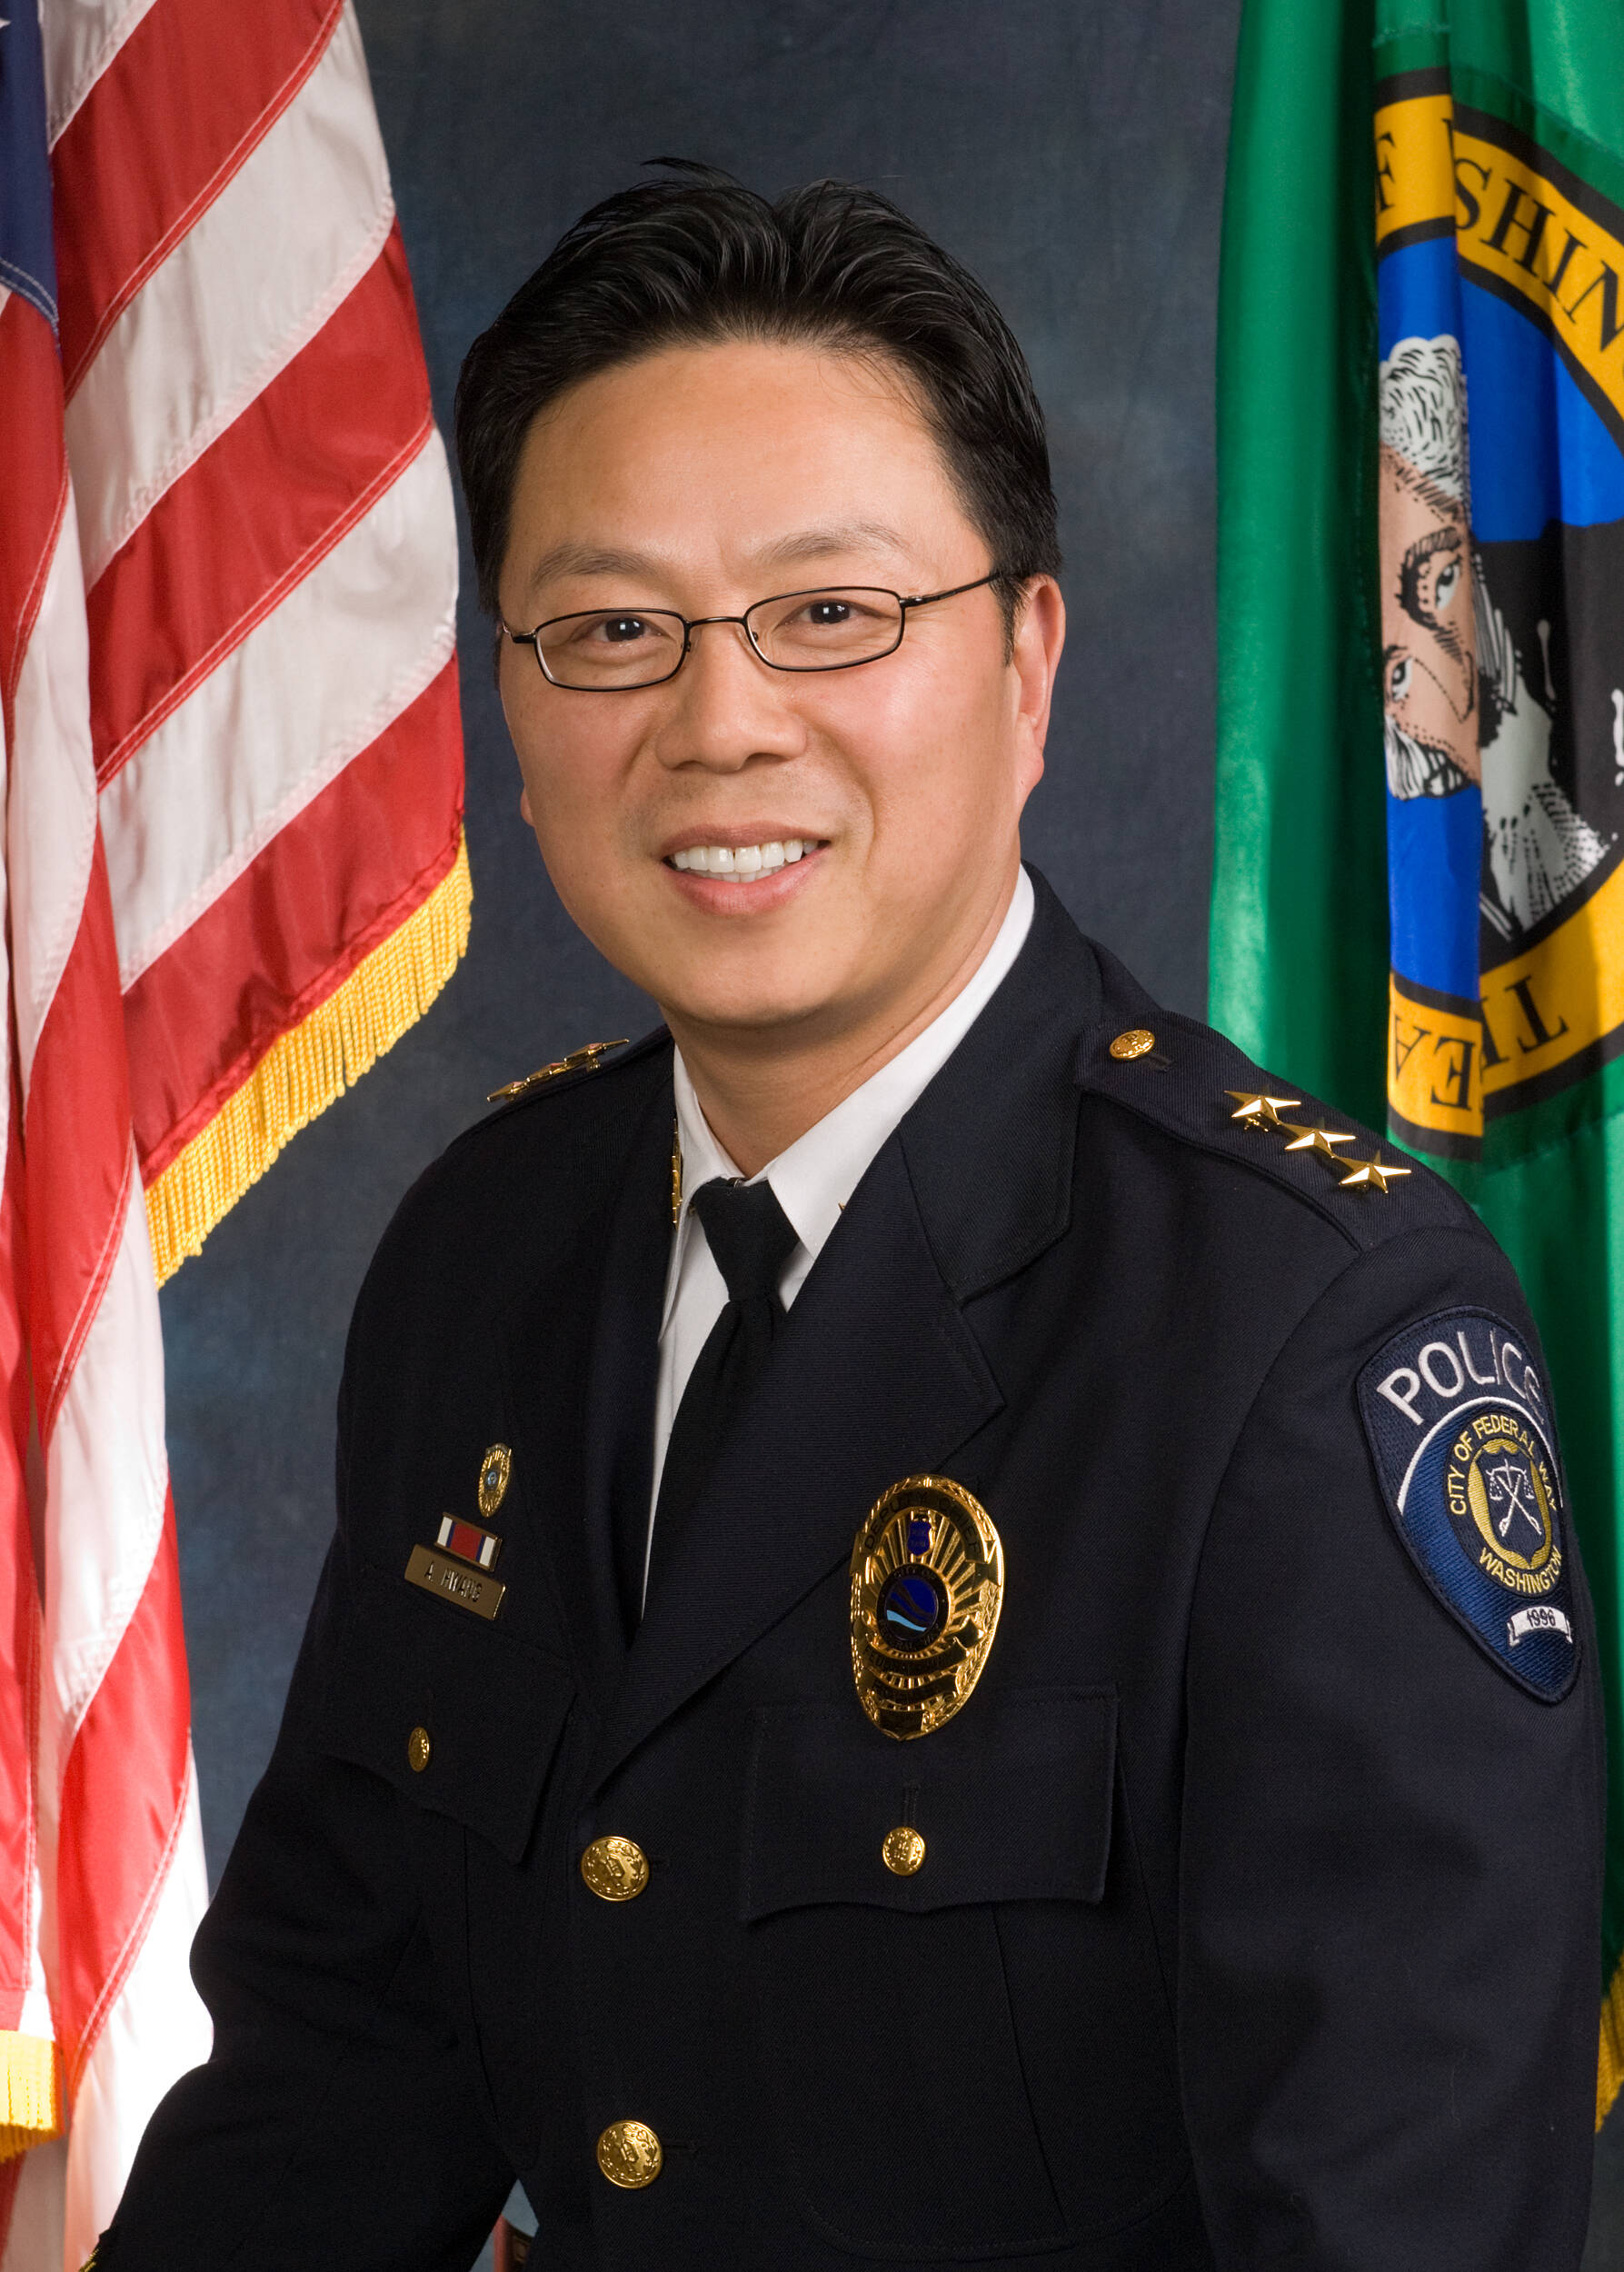 Federal Way Police Chief Andy Hwang (Courtesy photo)